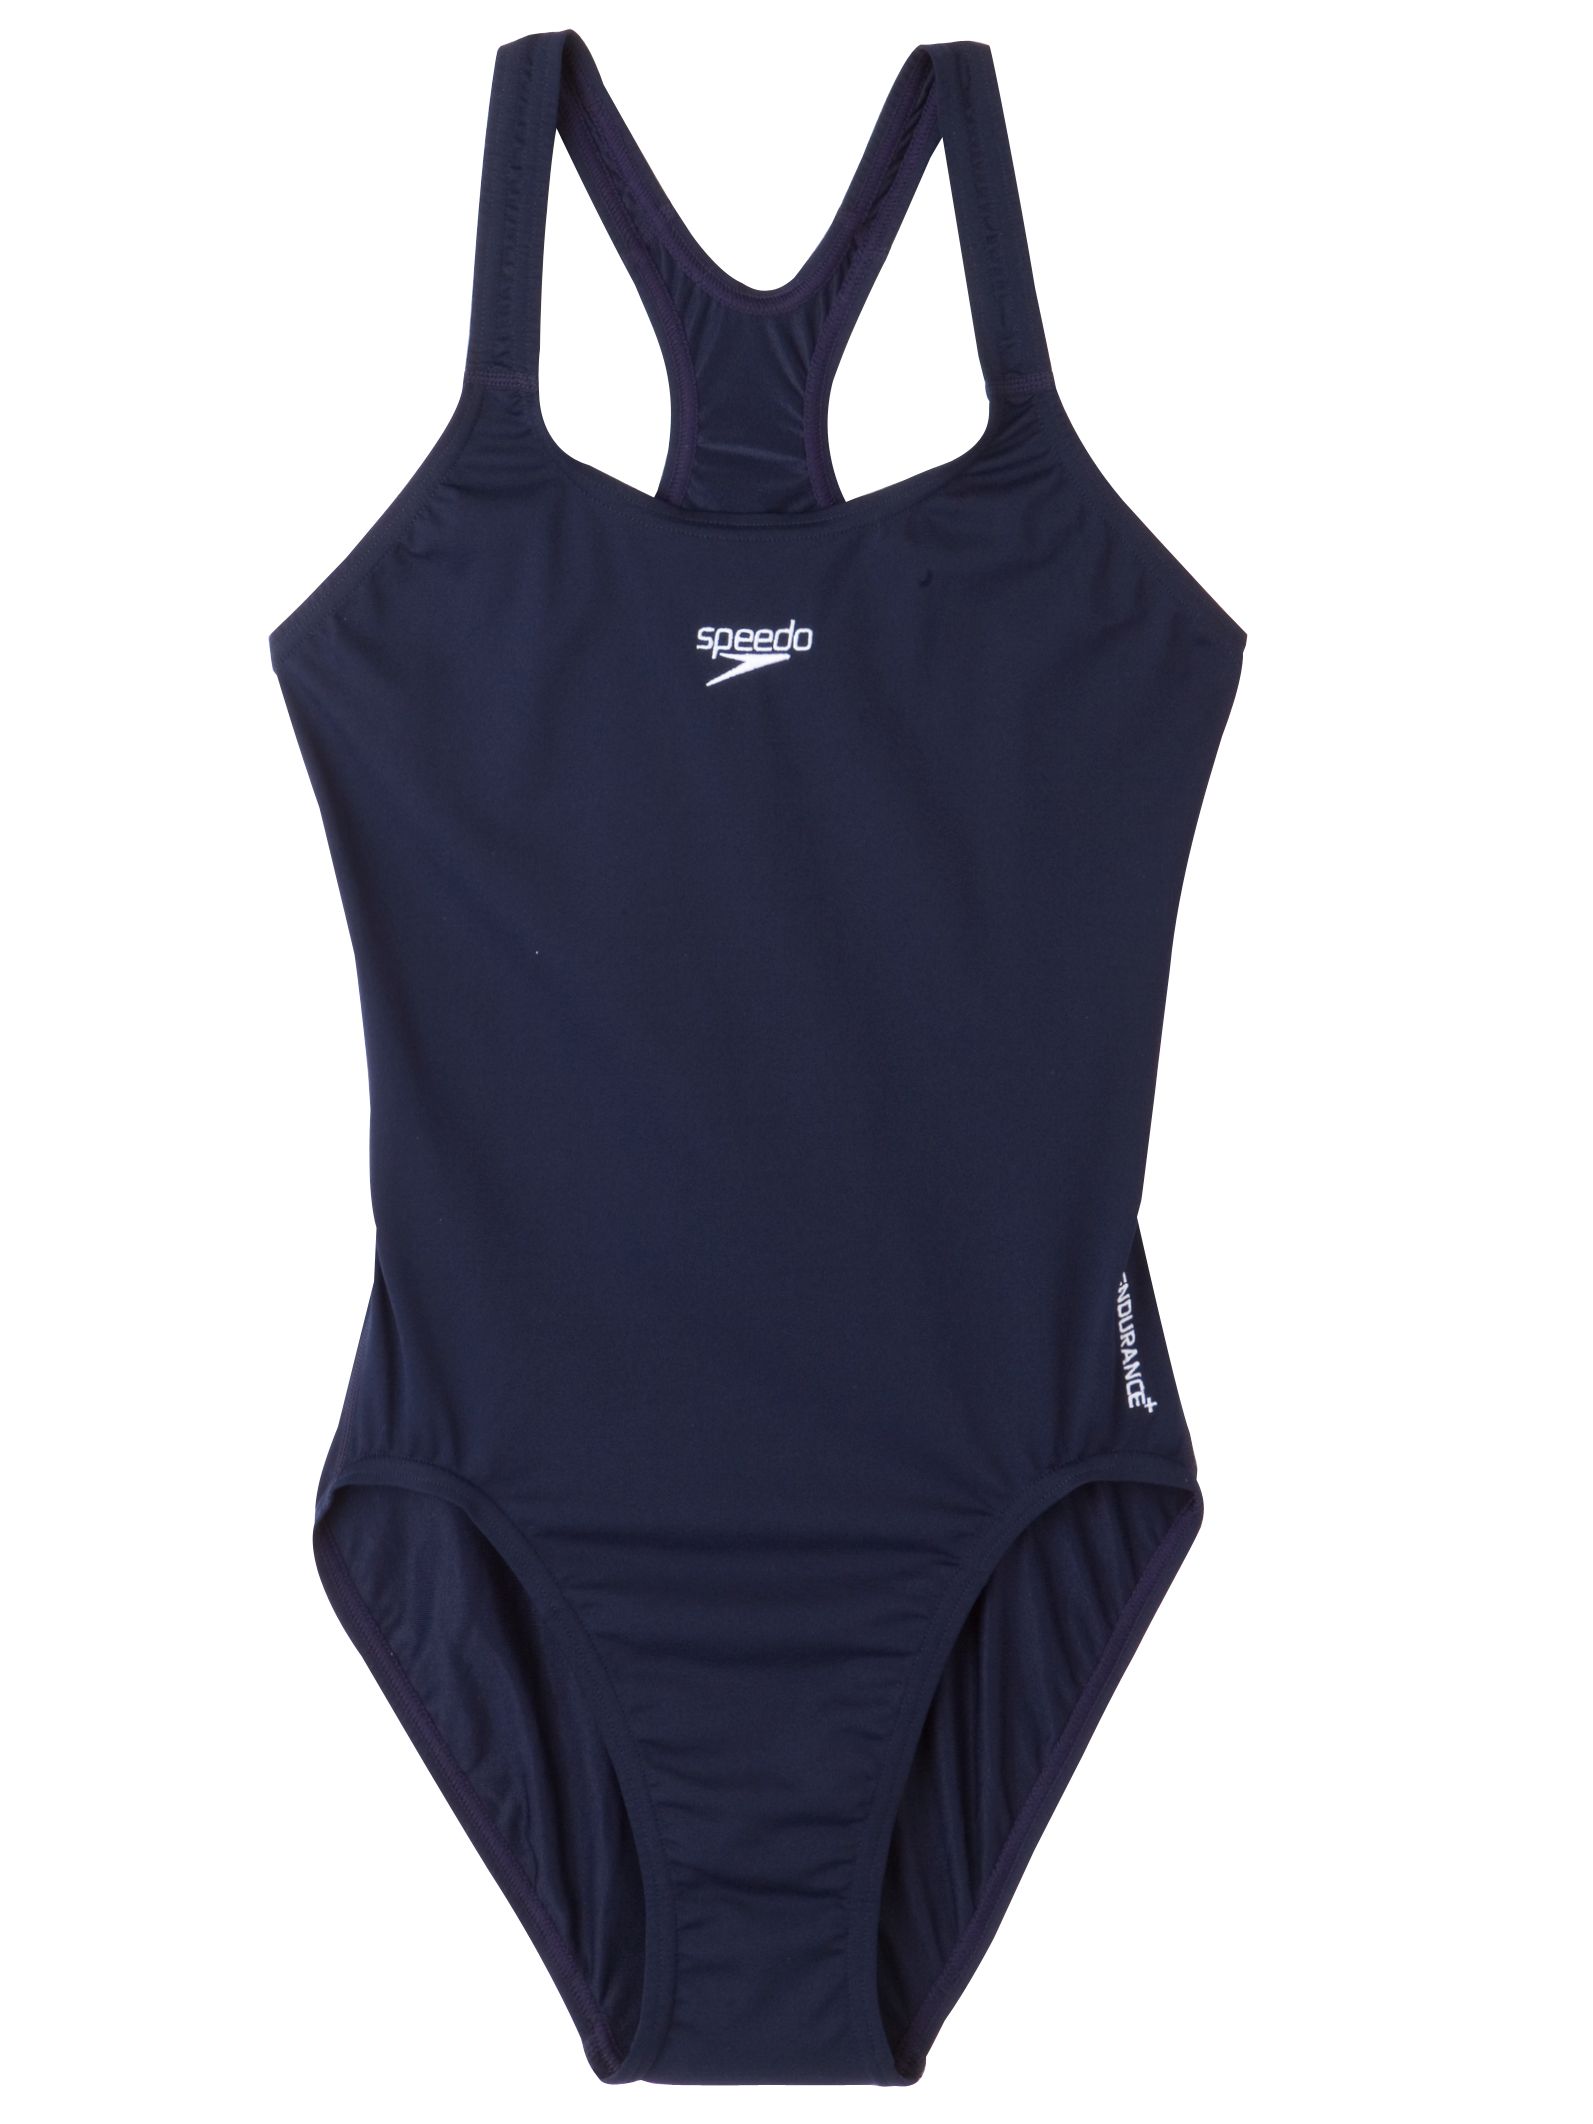 Speedo Endurance  Medalist Swimsuit, Navy, Size 40